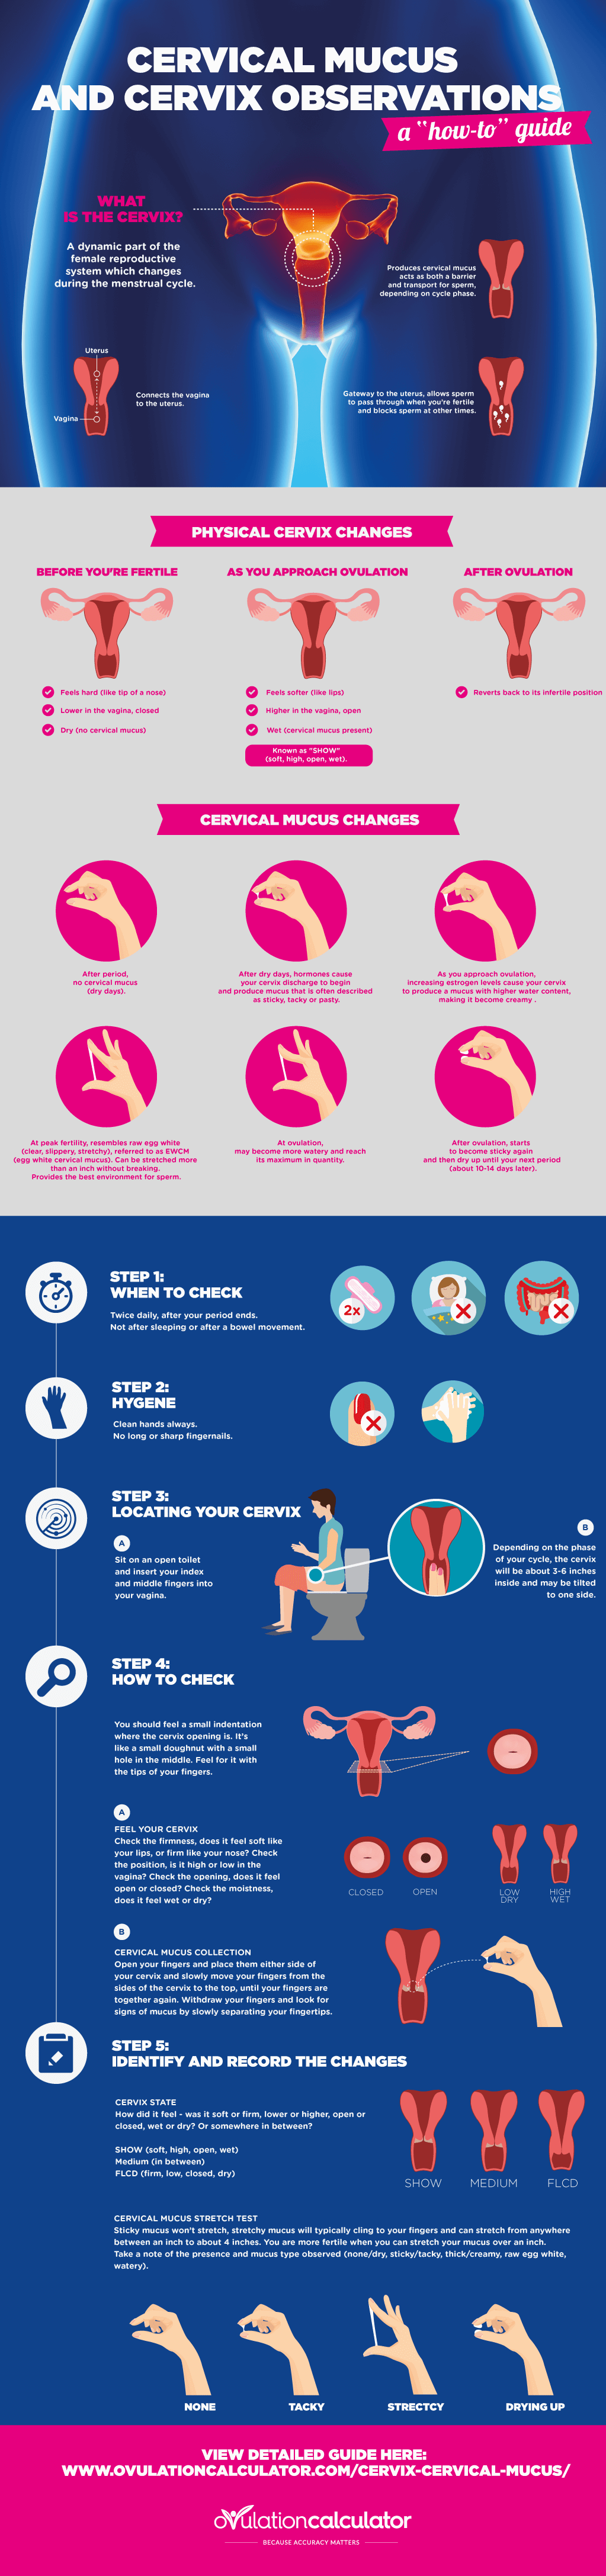 Observe & Evaluate Cervical Mucus - Cervical Mucus Guide.